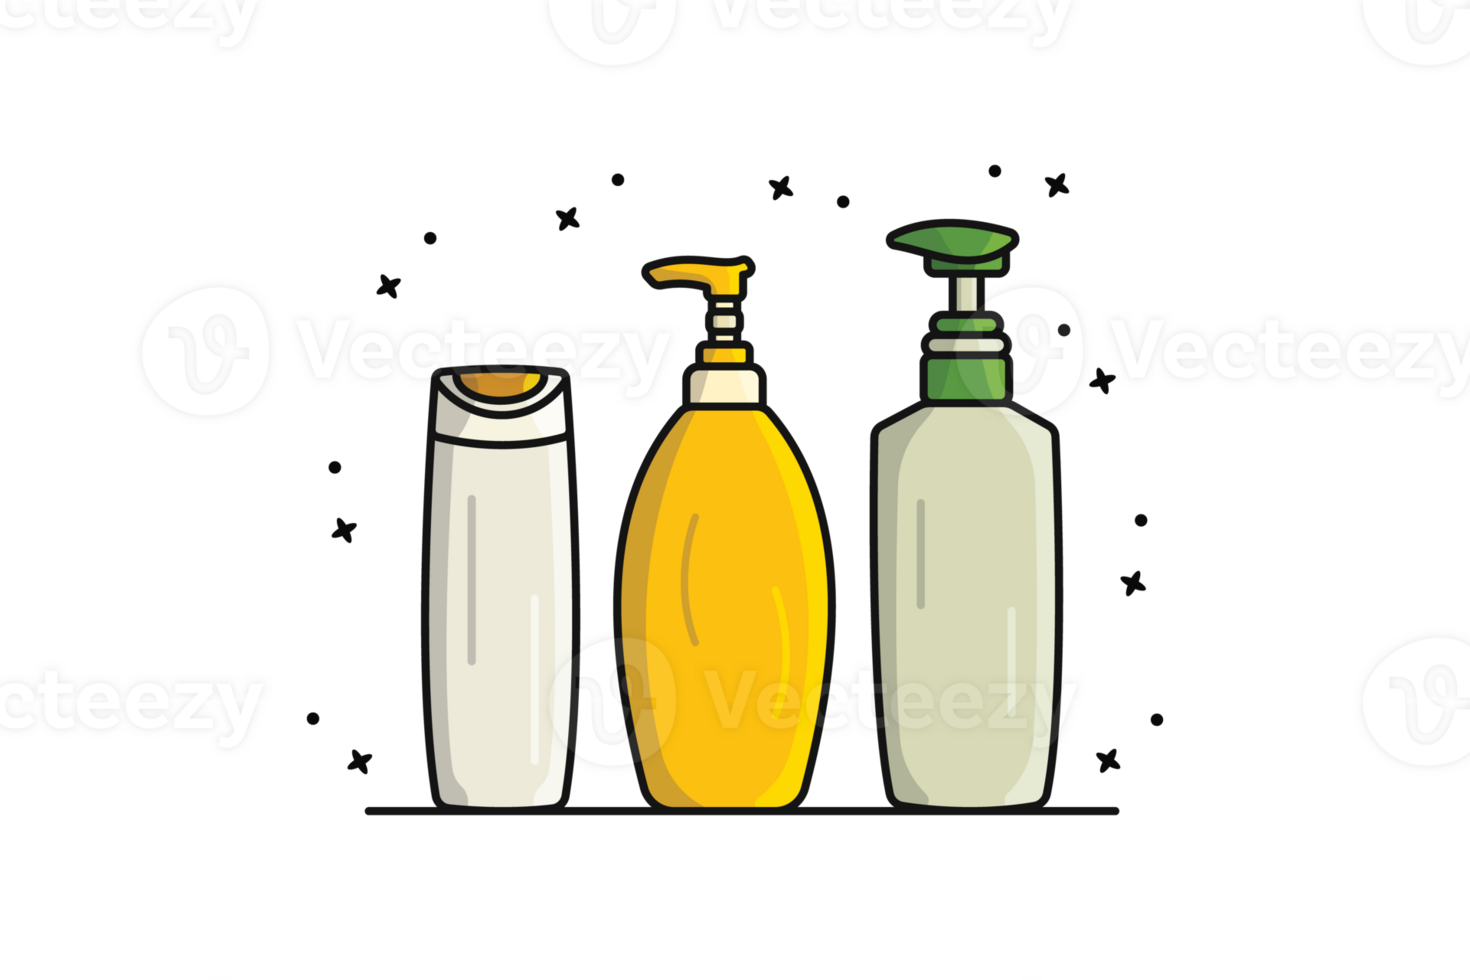 Set of Natural Soap or Shampoo Bottles illustration. Healthcare and medical icon concept. Liquid soap bottles collection design. png